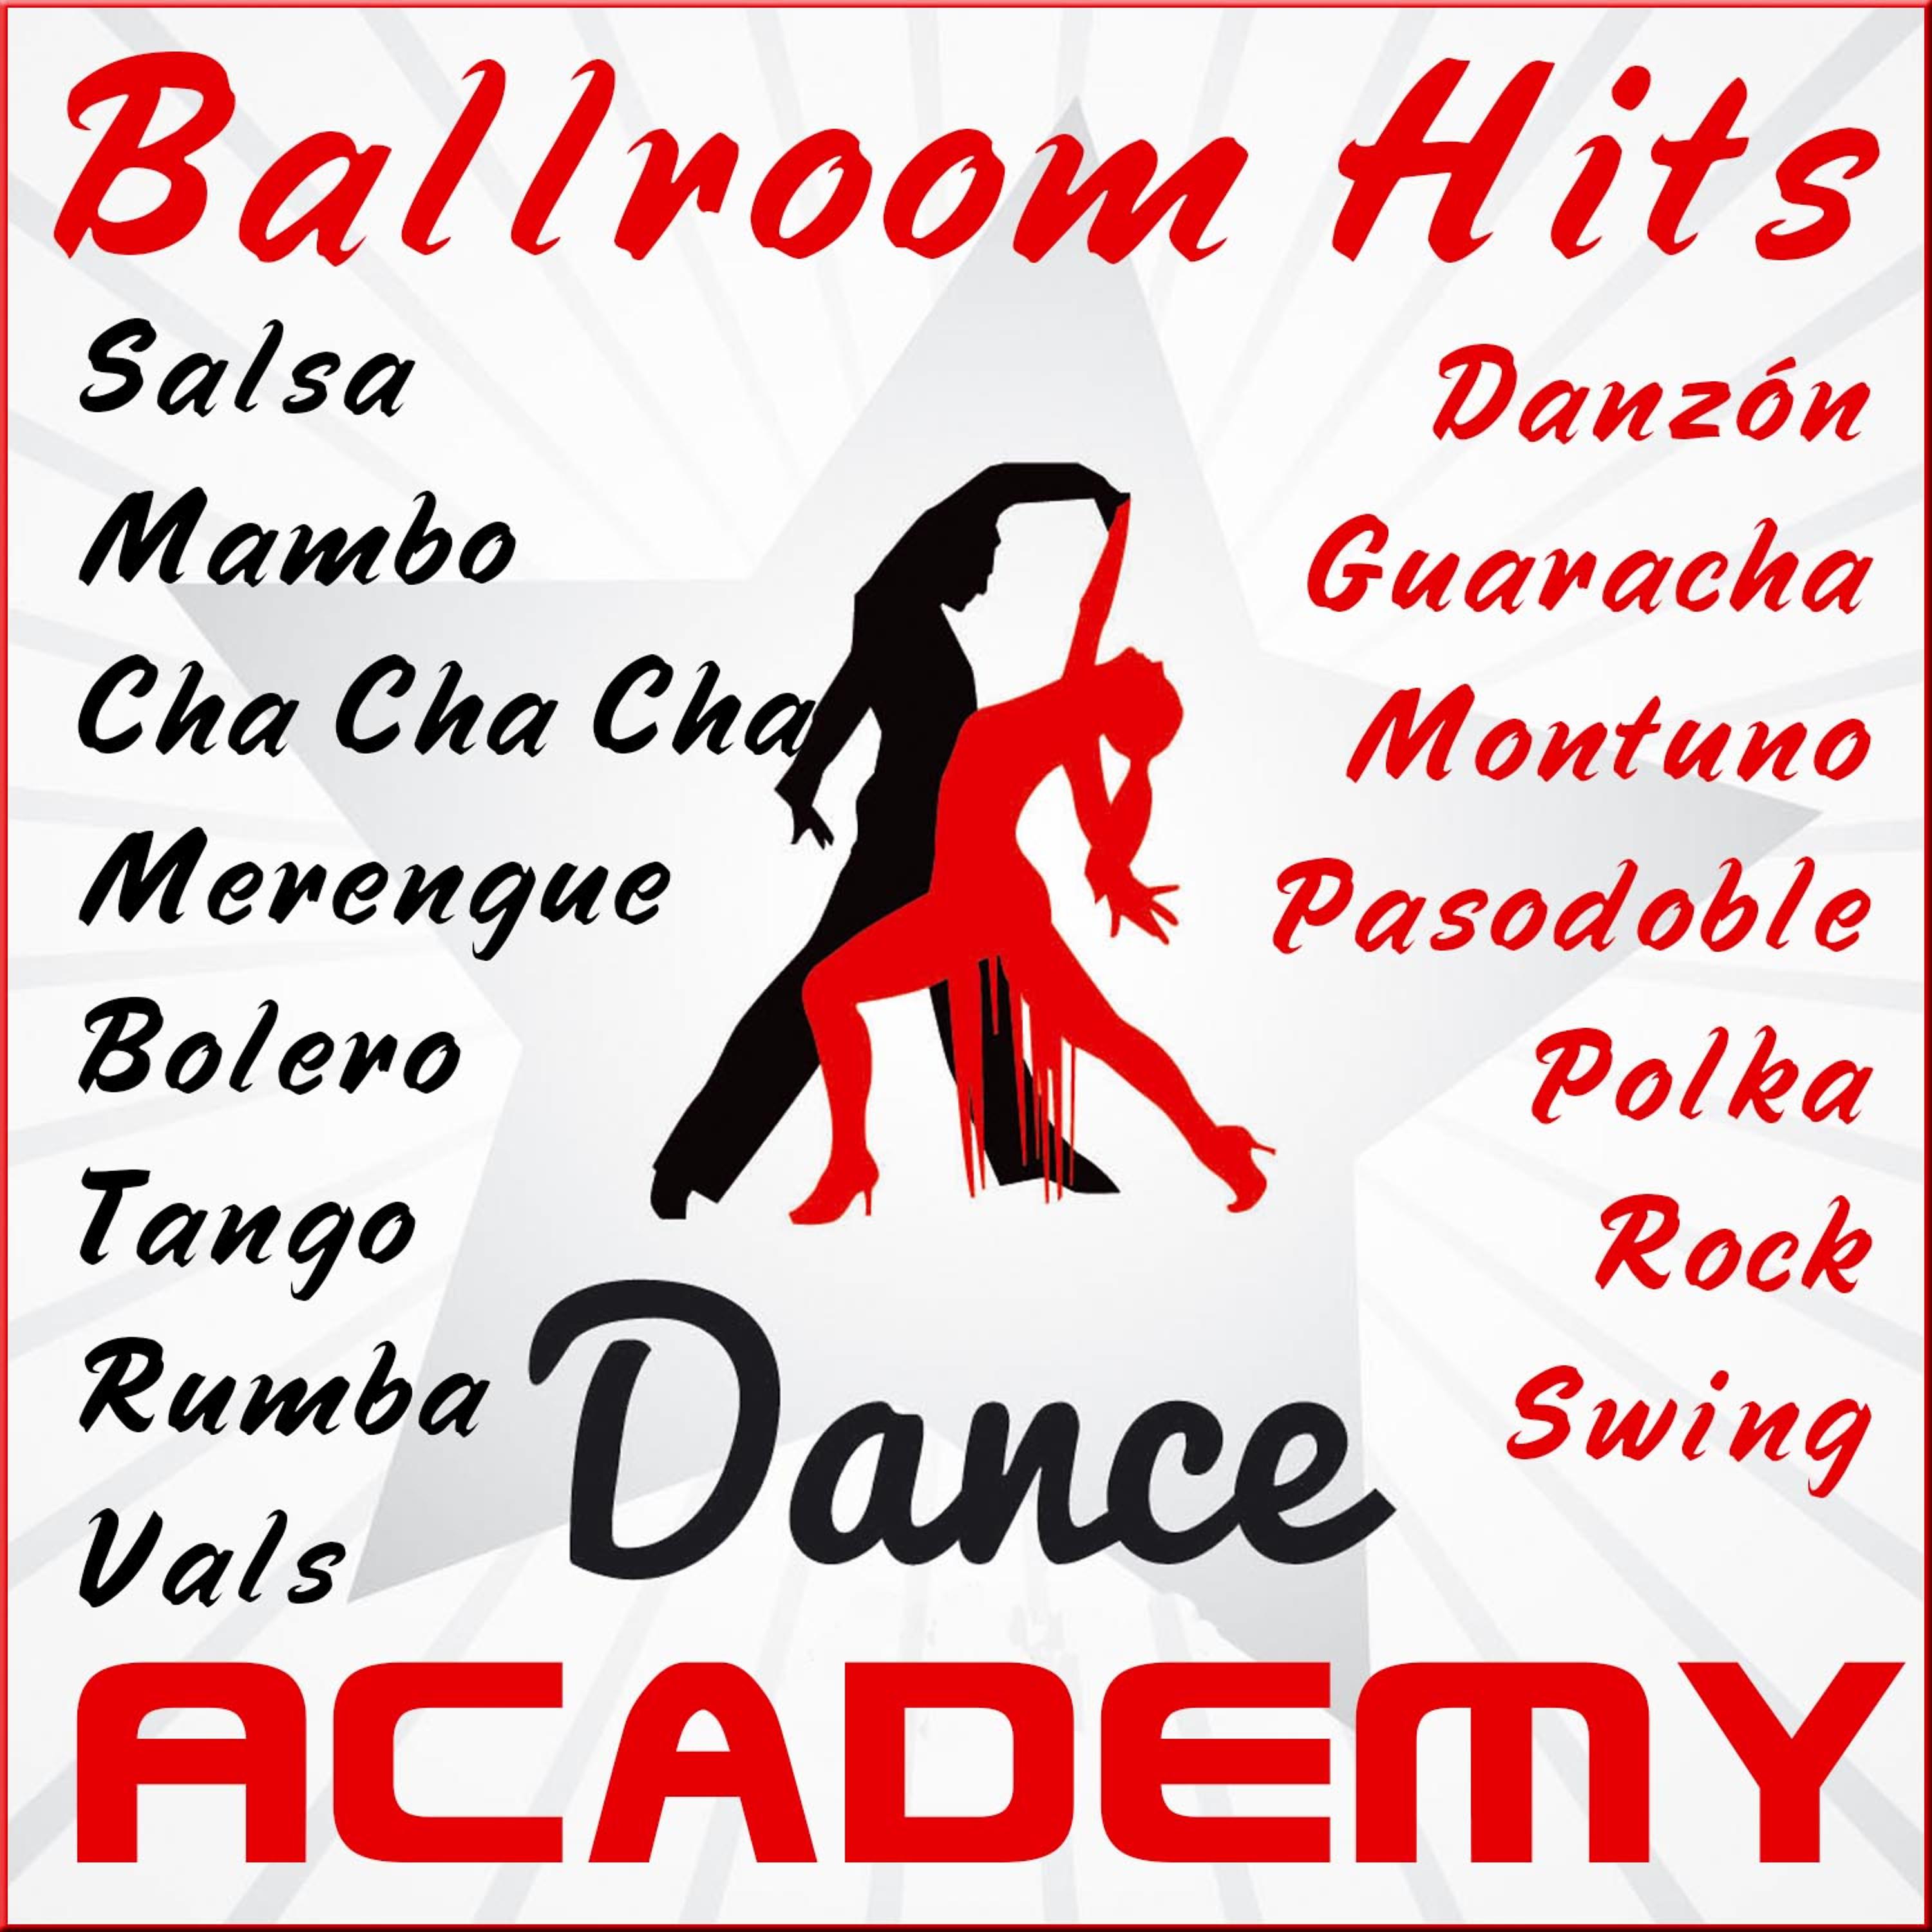 Постер альбома Dance Academy: Ballroom Hits (Salsa,Mambo,Merengue,Bolero,Tango,Rumba,Vals,Cha Cha Cha,Danzón,Guaracha,Montuno,Pasodoble,Polka,Rock,Swing)